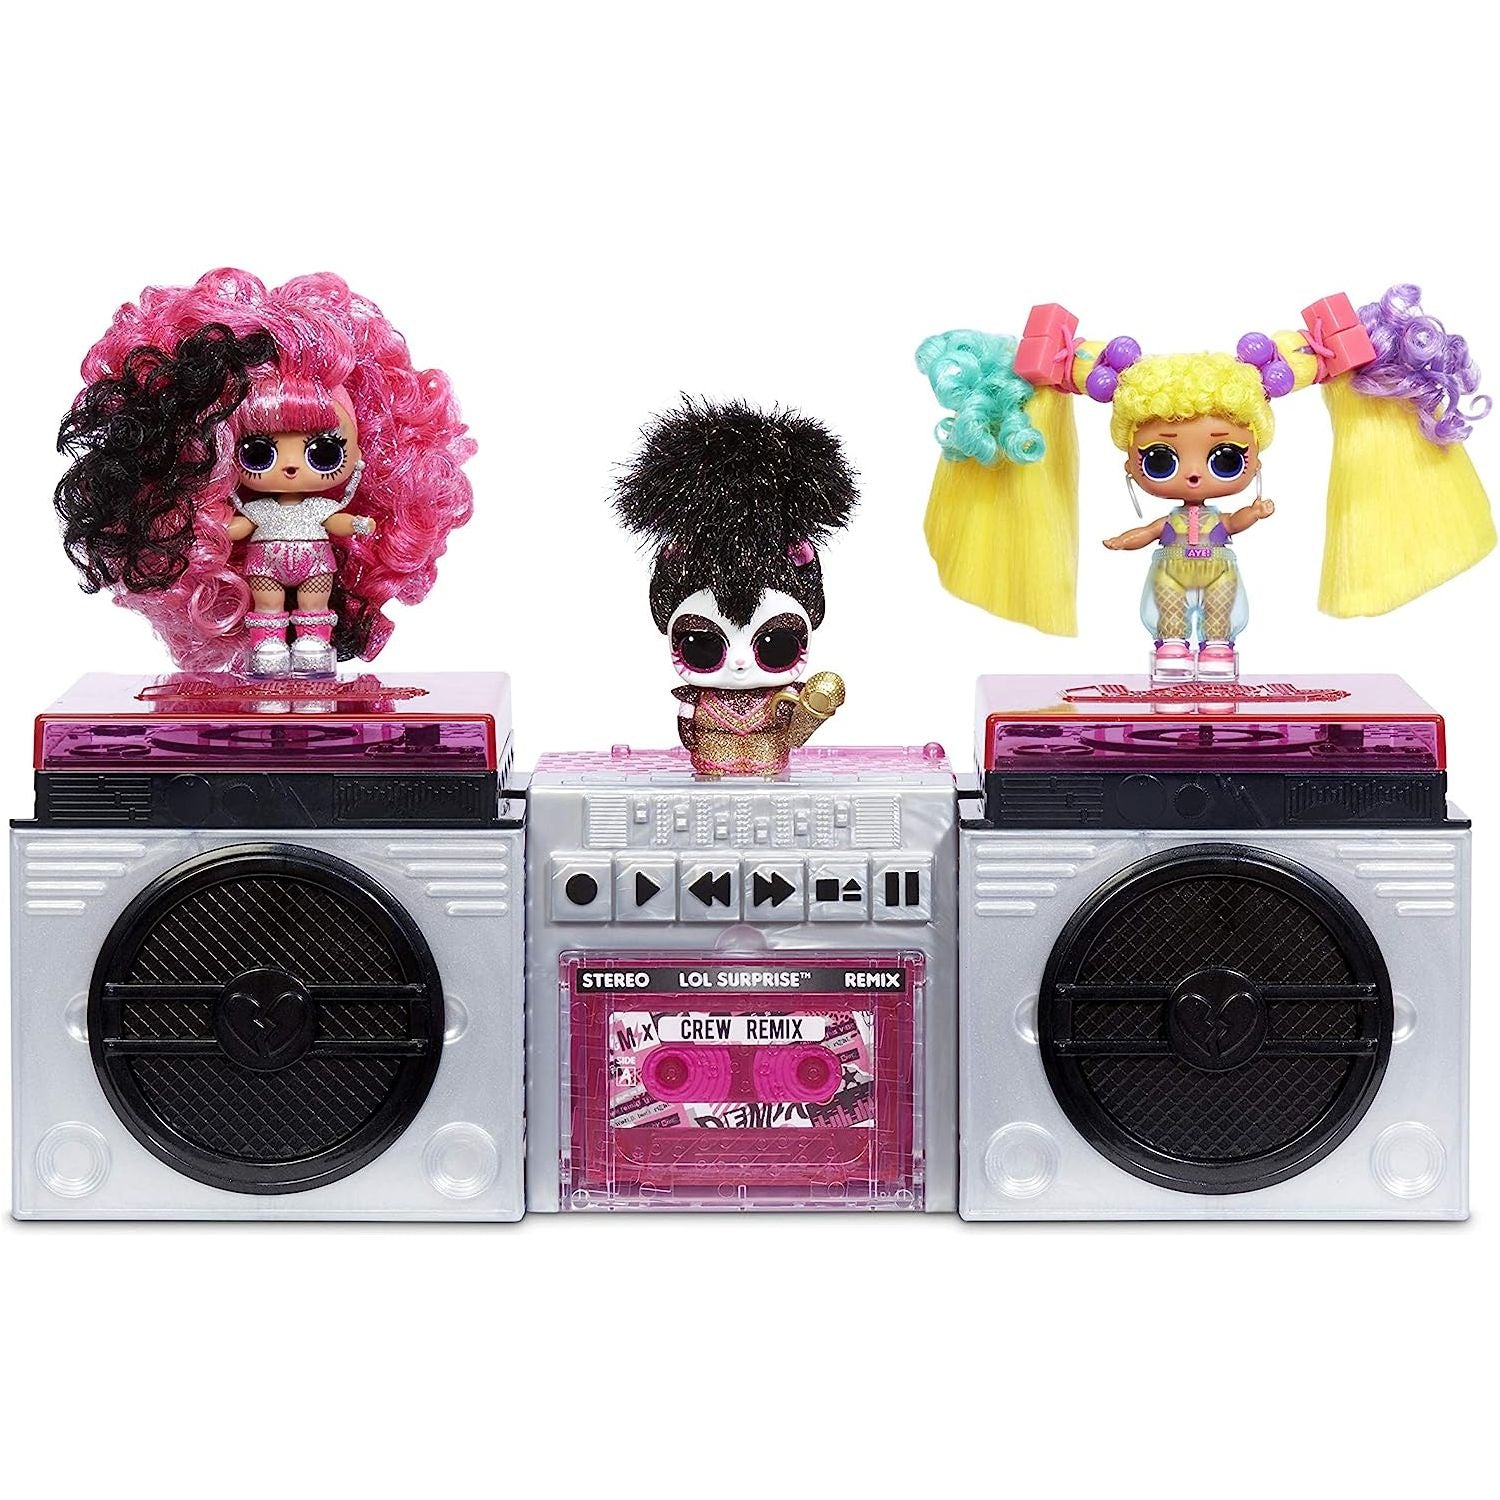 Lol surprise remix pets 9 surprises, real hair includes music cassette tape with surprise song lyrics, accessories, dolls